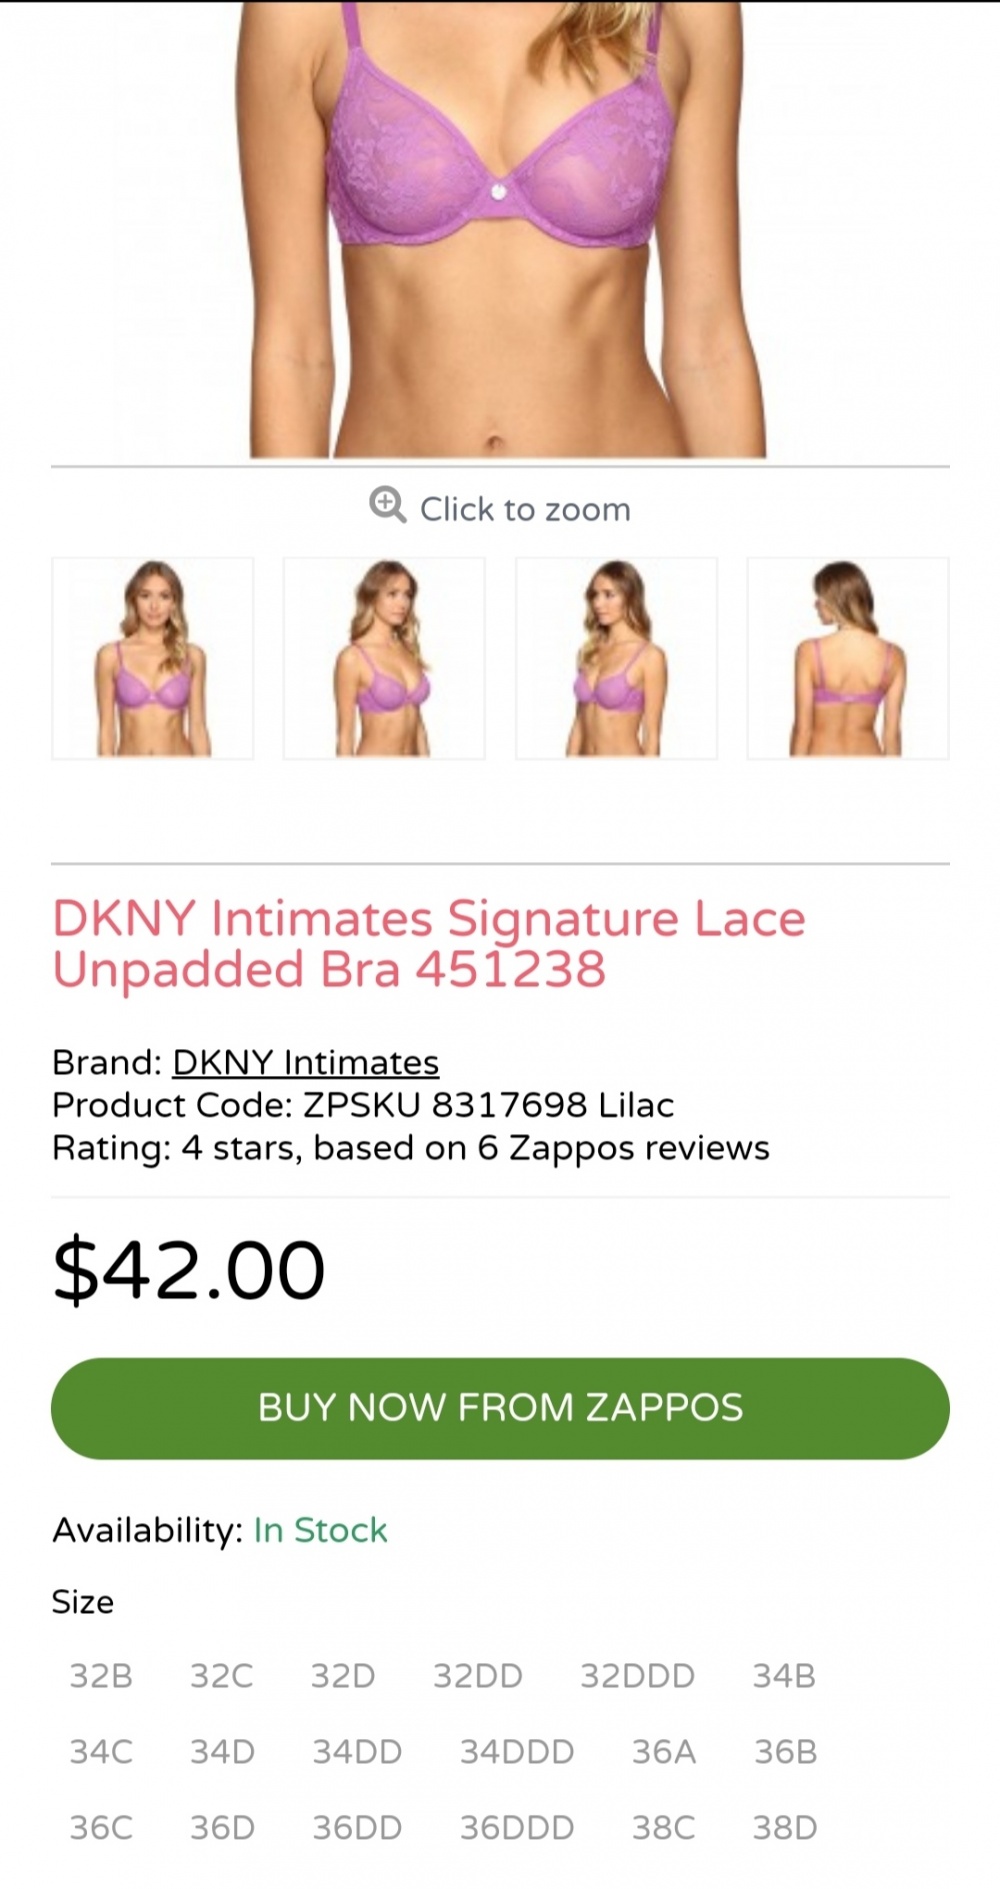 DKNY 451238 Signature Lace Unpadded Bra 